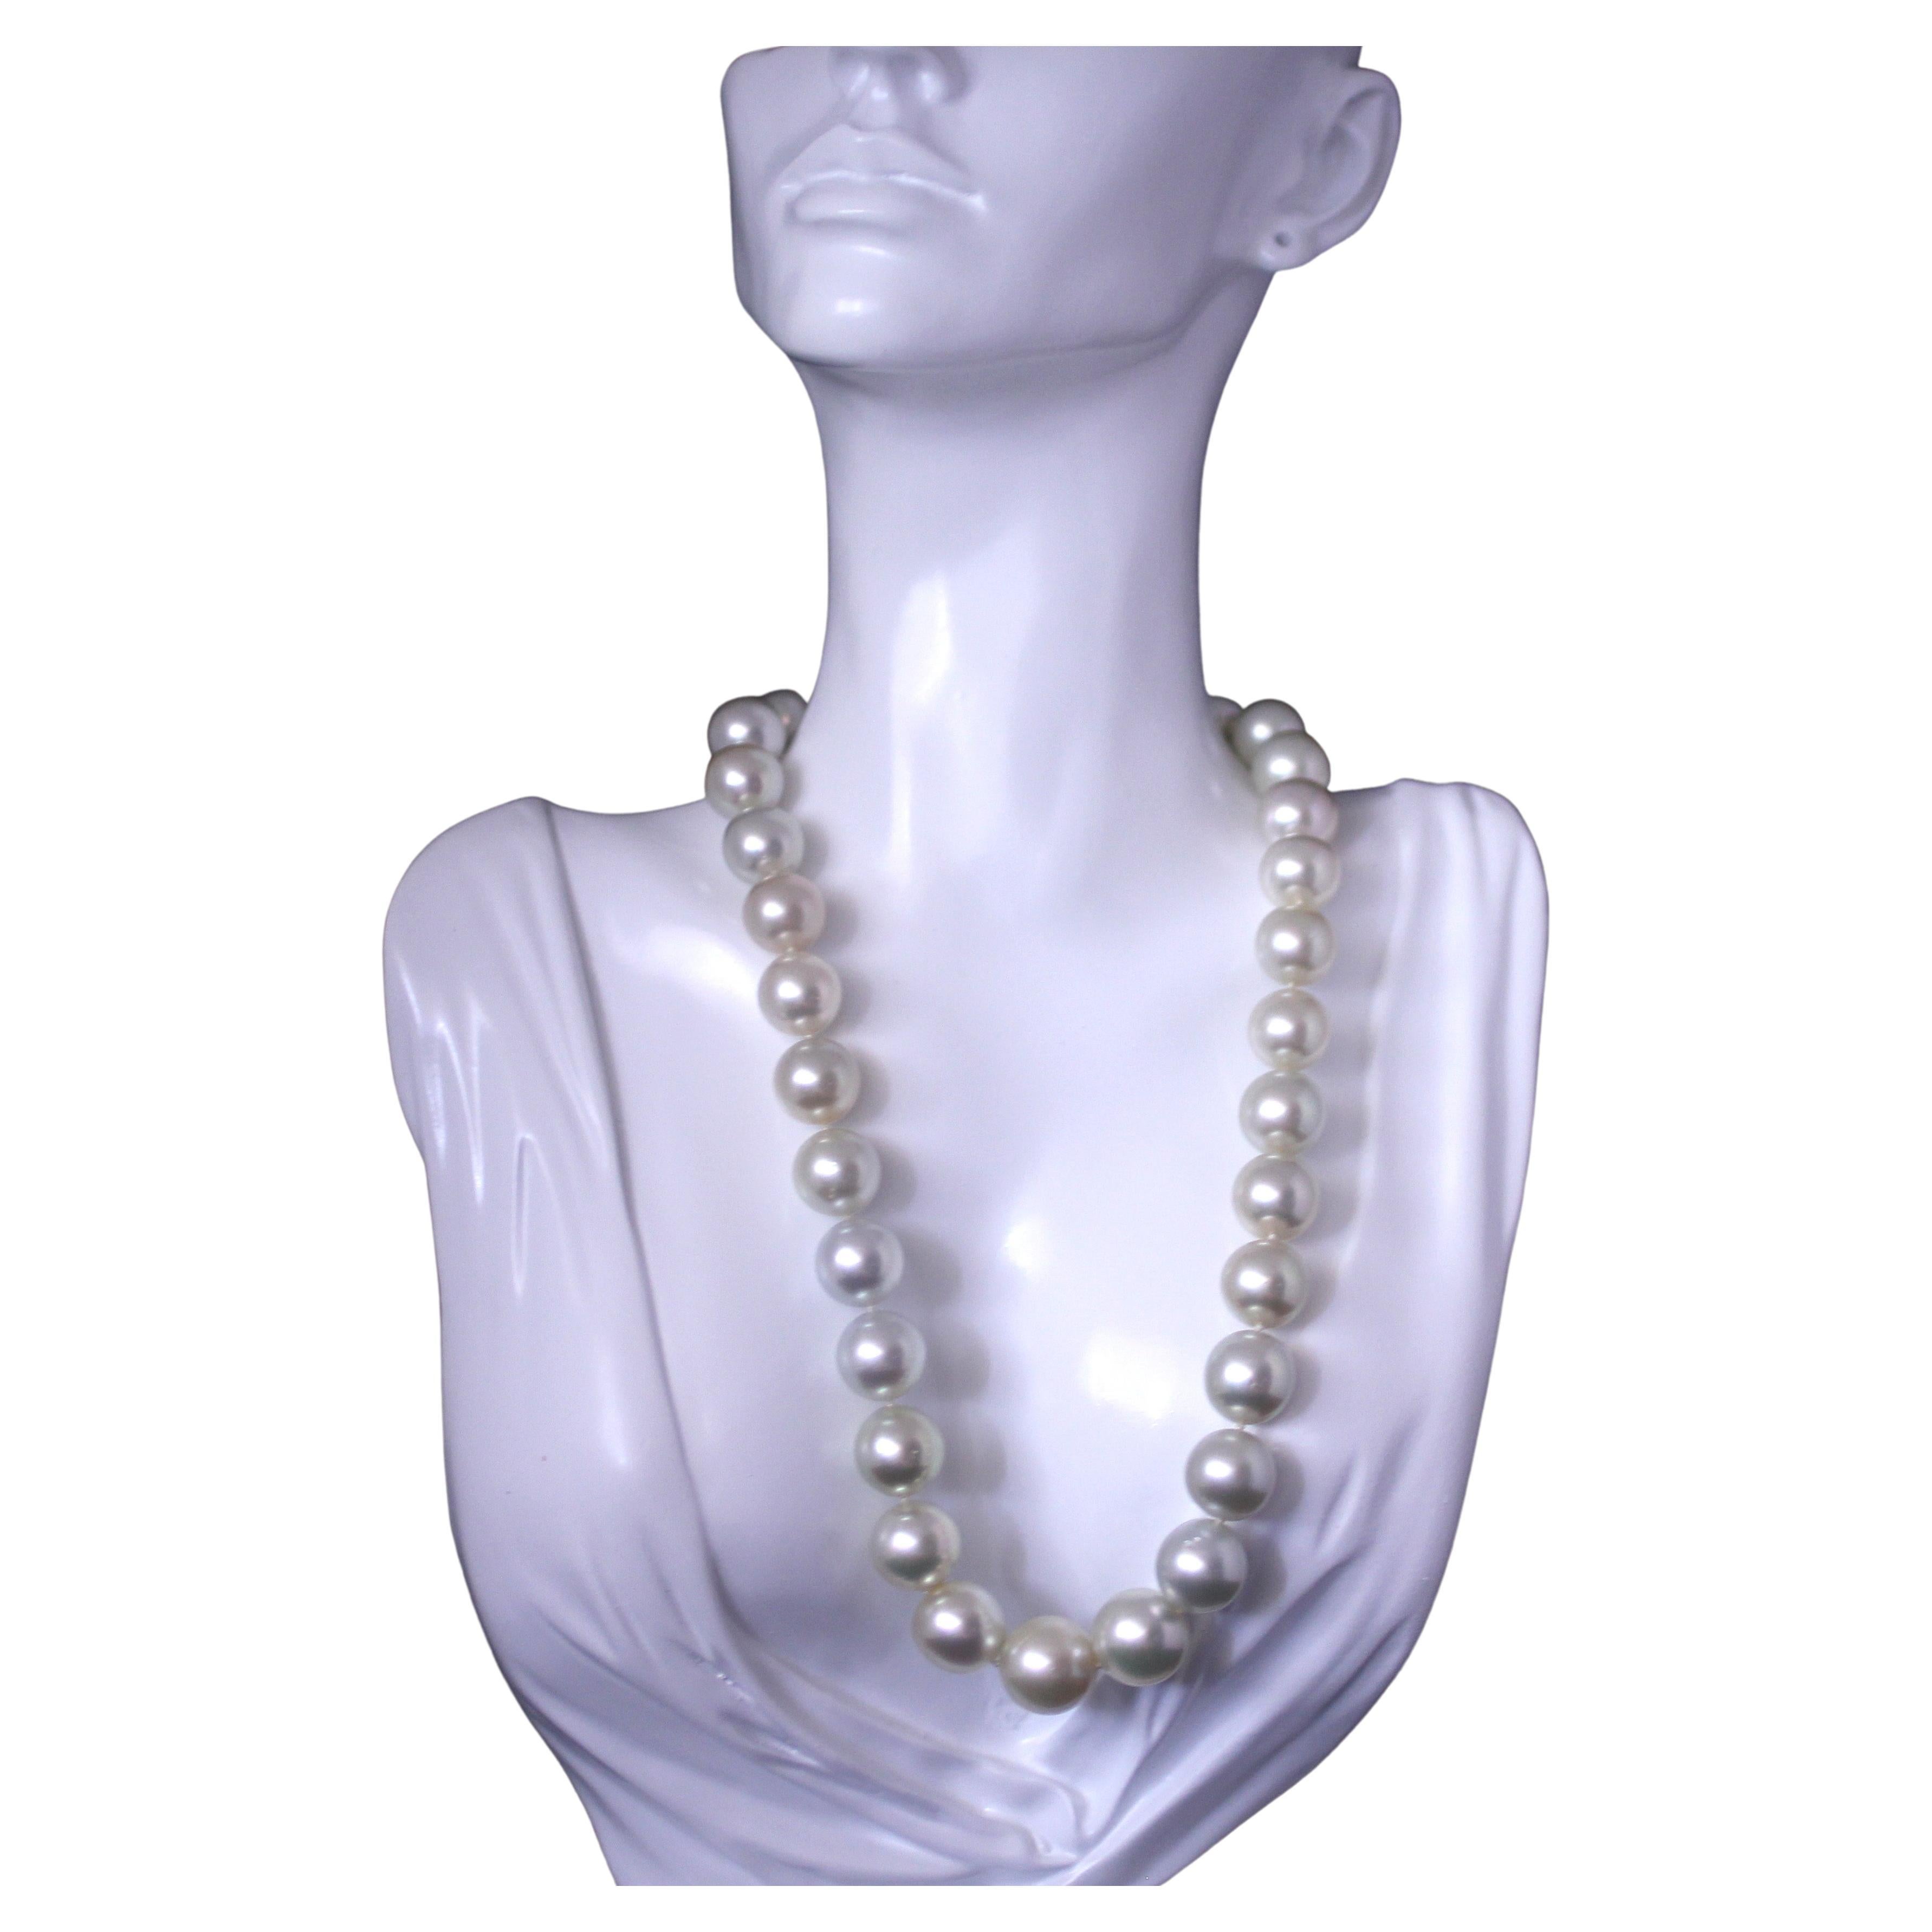 pearl sizes in millimeters